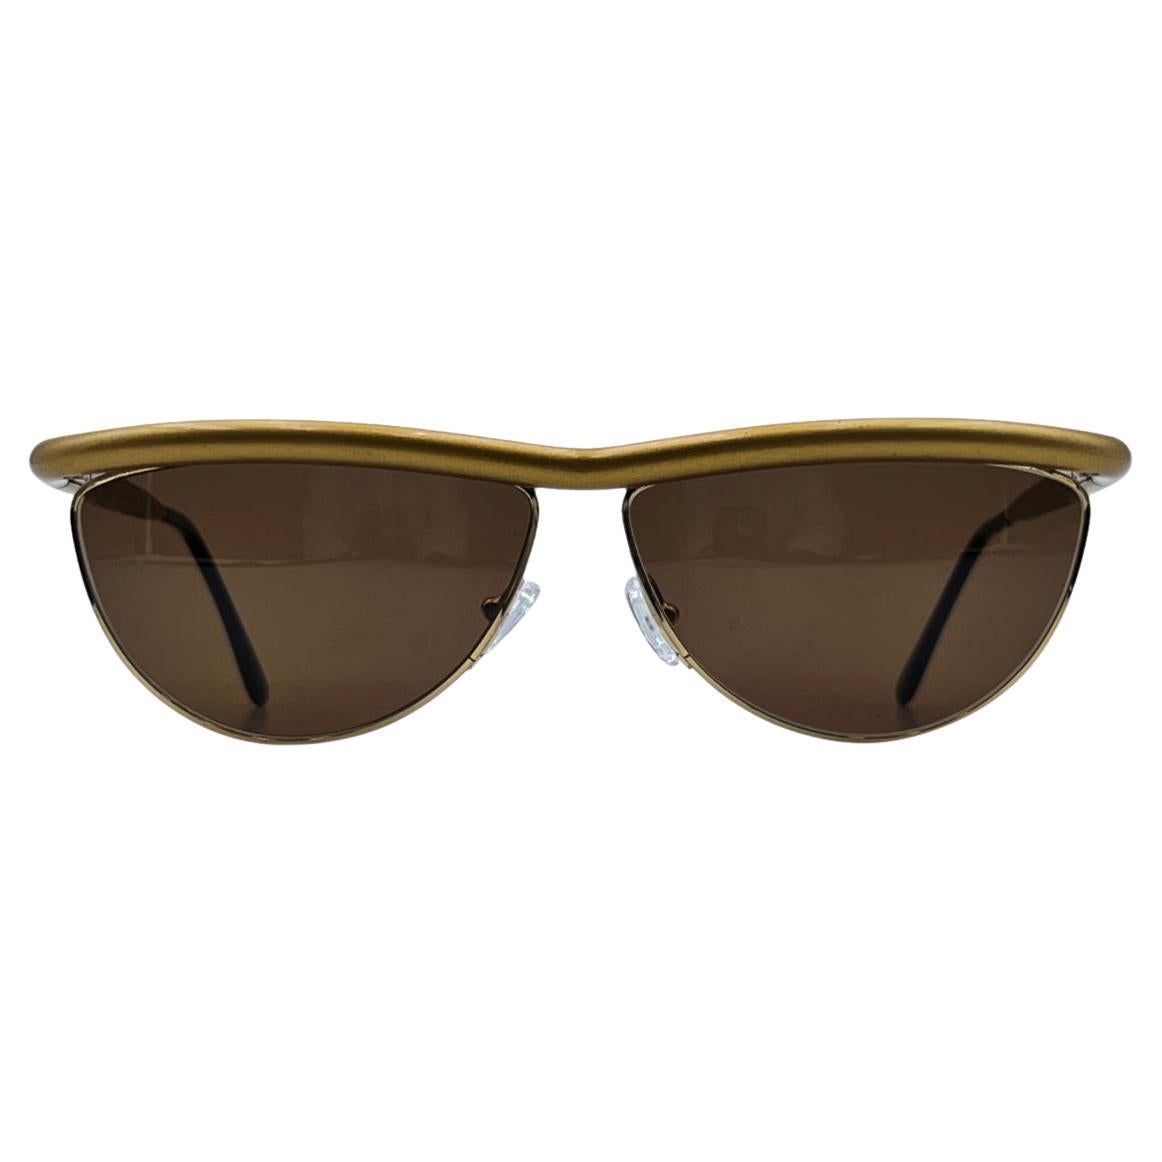 Gianfranco Ferre Vintage Gold Metal Sunglasses GFF 31/S 512